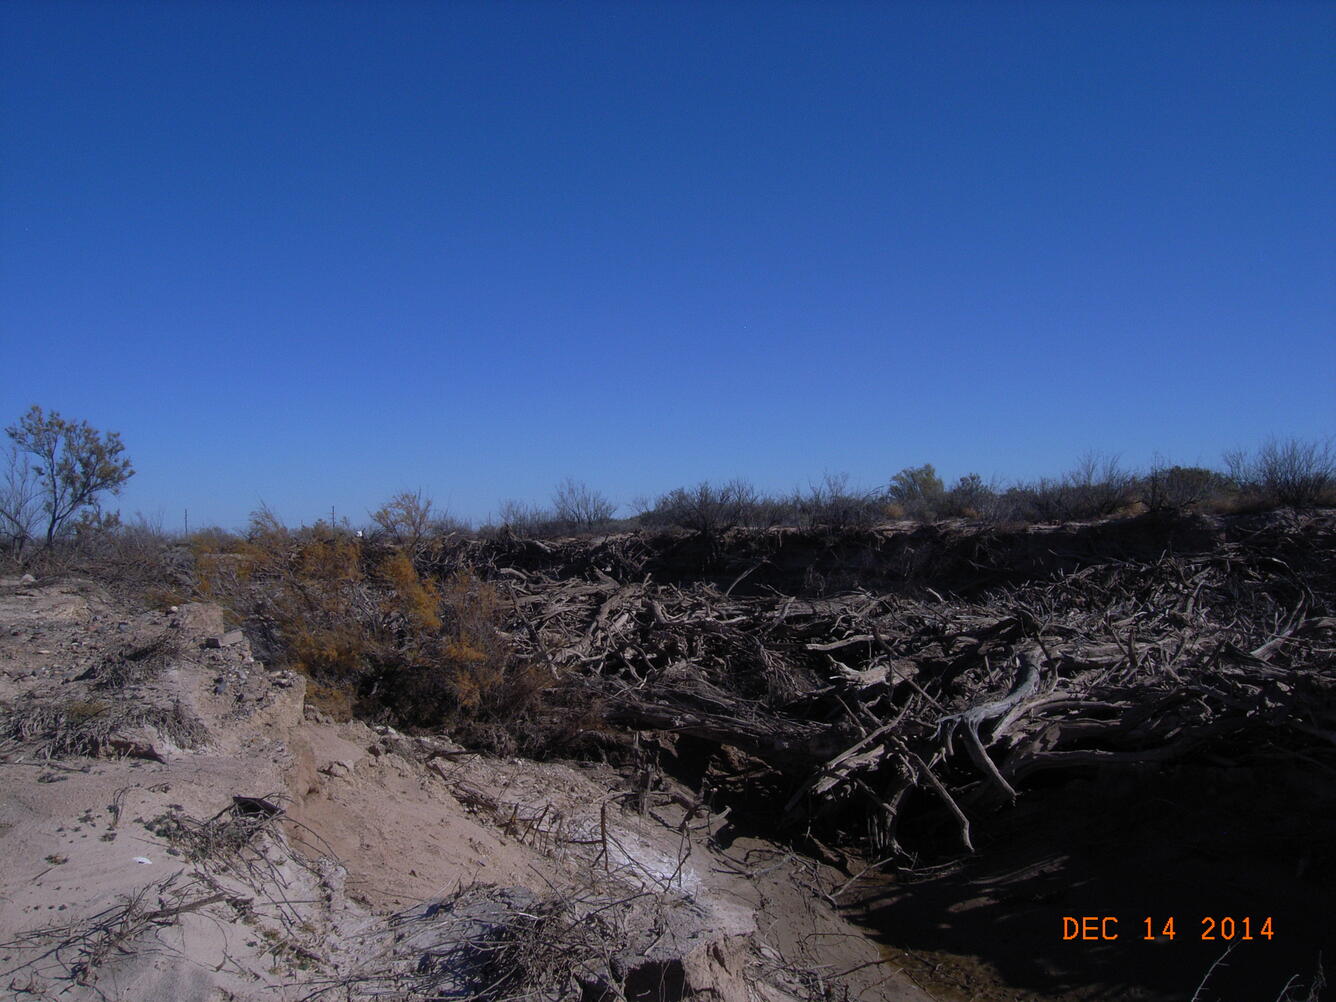 Pecos River at Pecos Texas - Salt Cedar debris